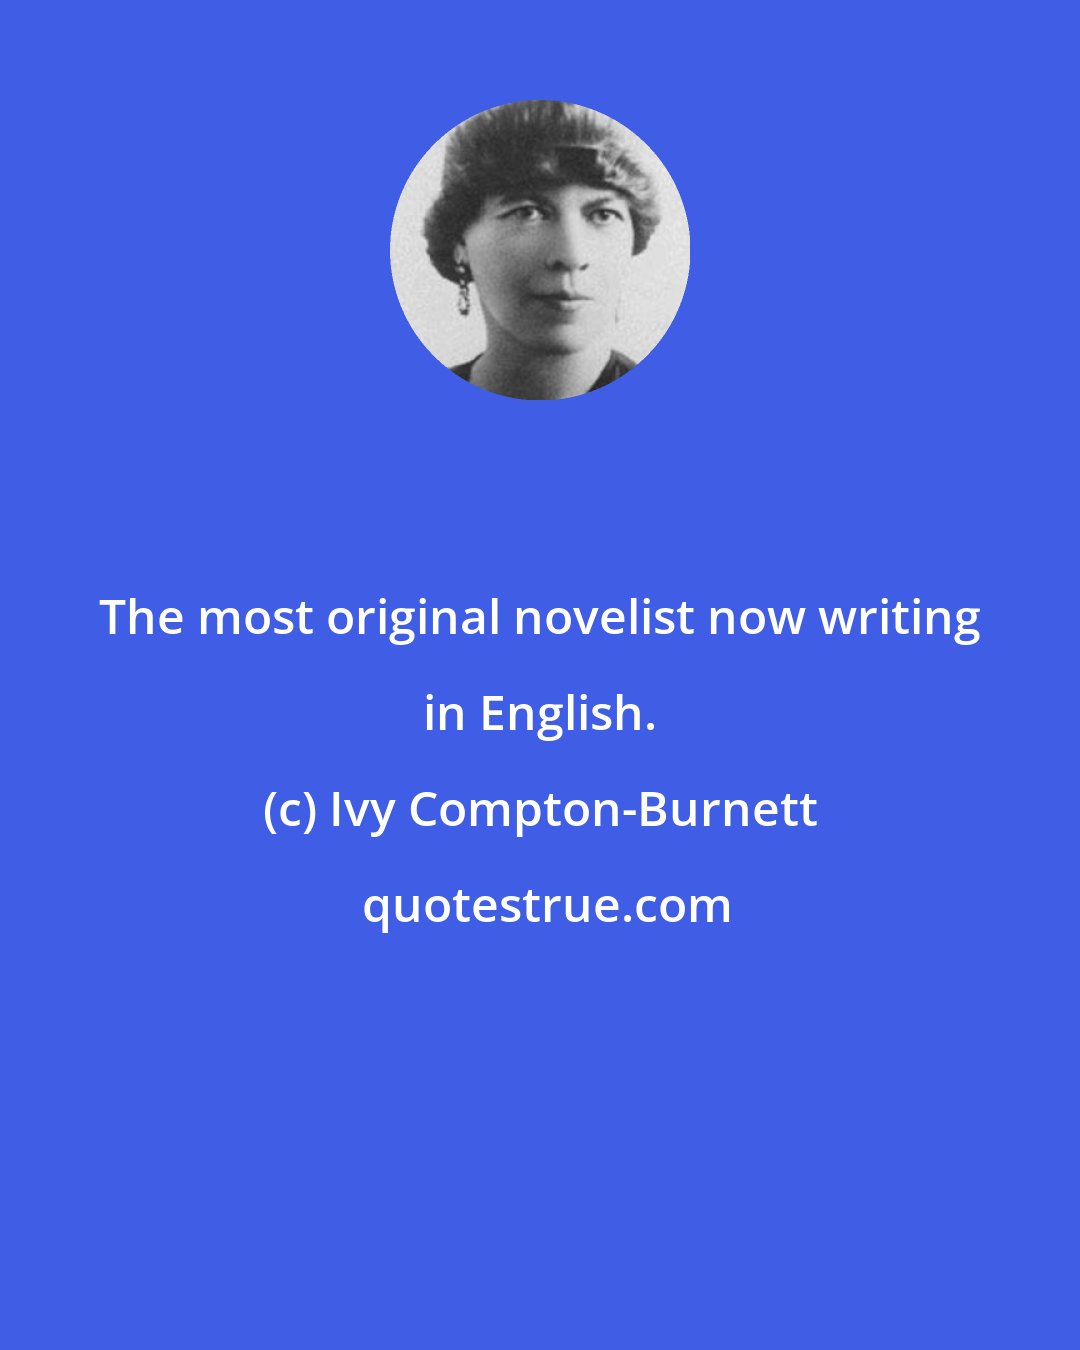 Ivy Compton-Burnett: The most original novelist now writing in English.